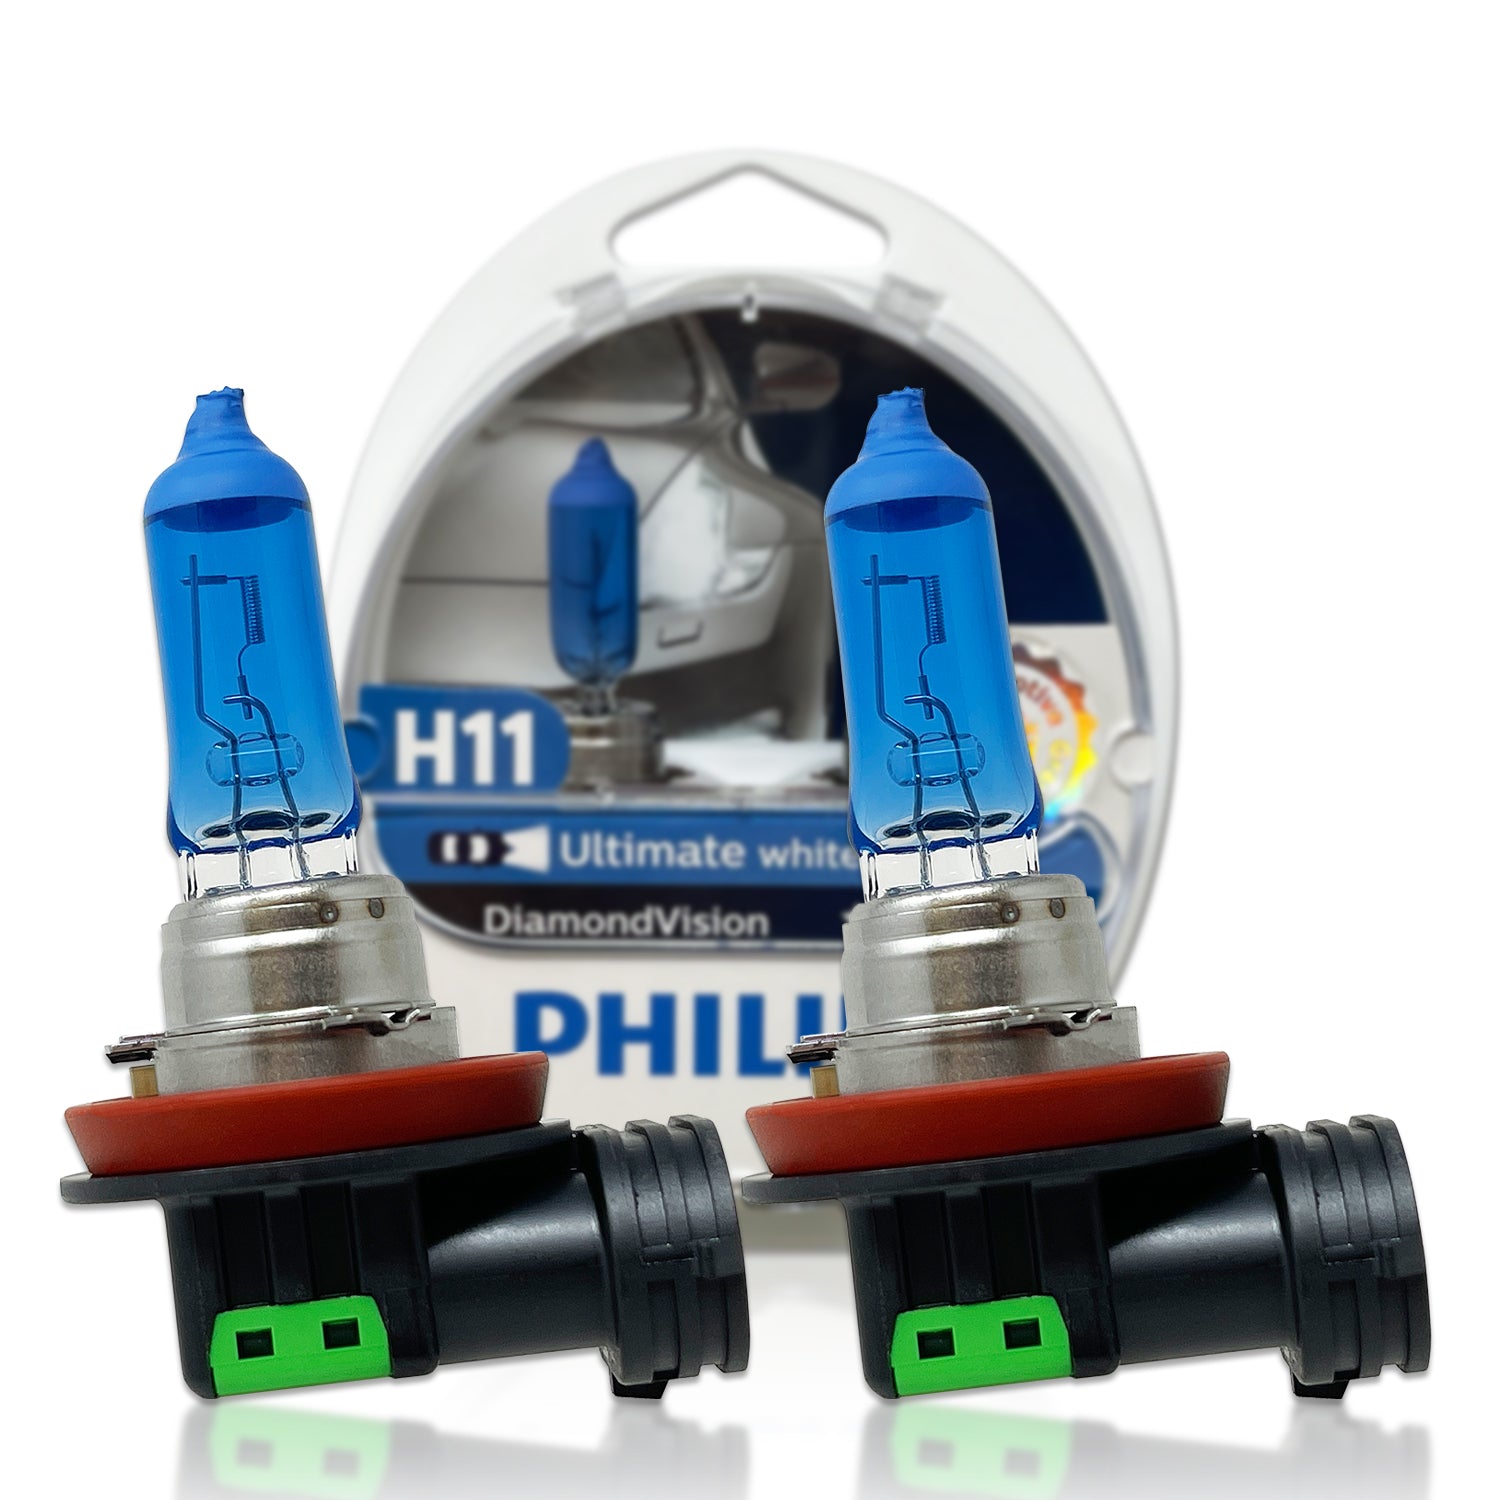 H8 H11 H16: Osram 46211CW LEDriving HL LED Bulbs